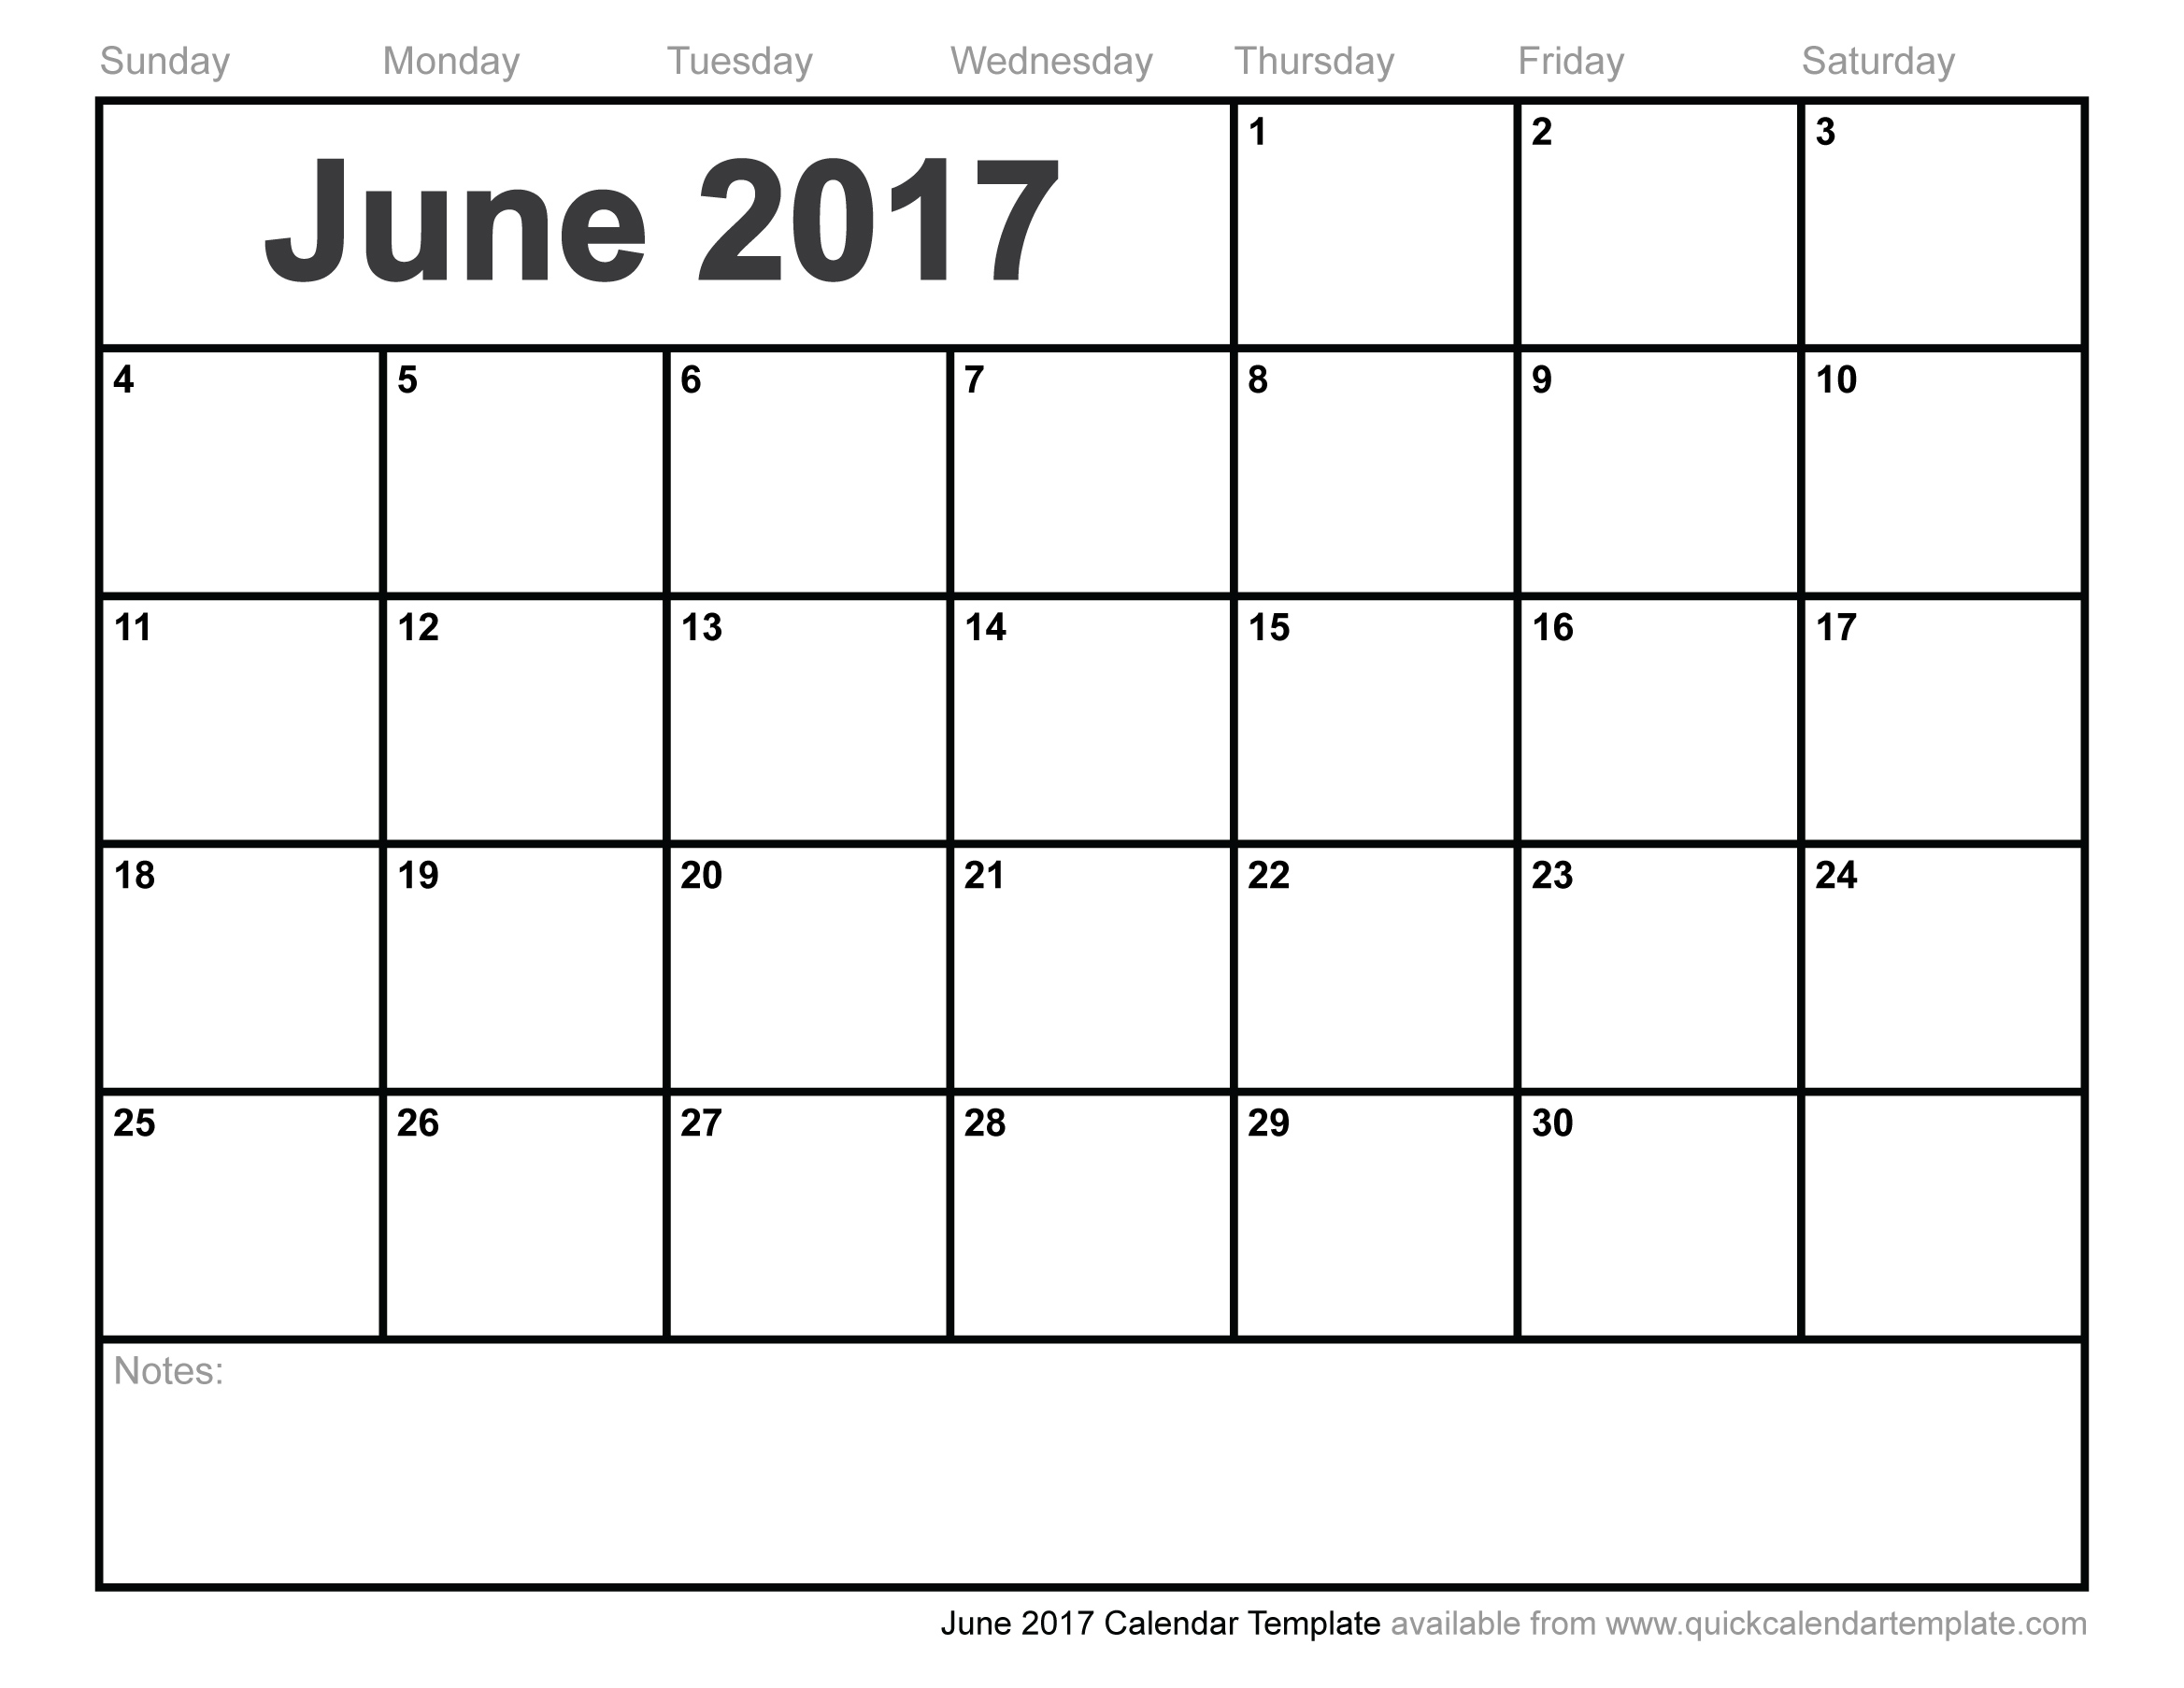 June 2017 Calendar Template